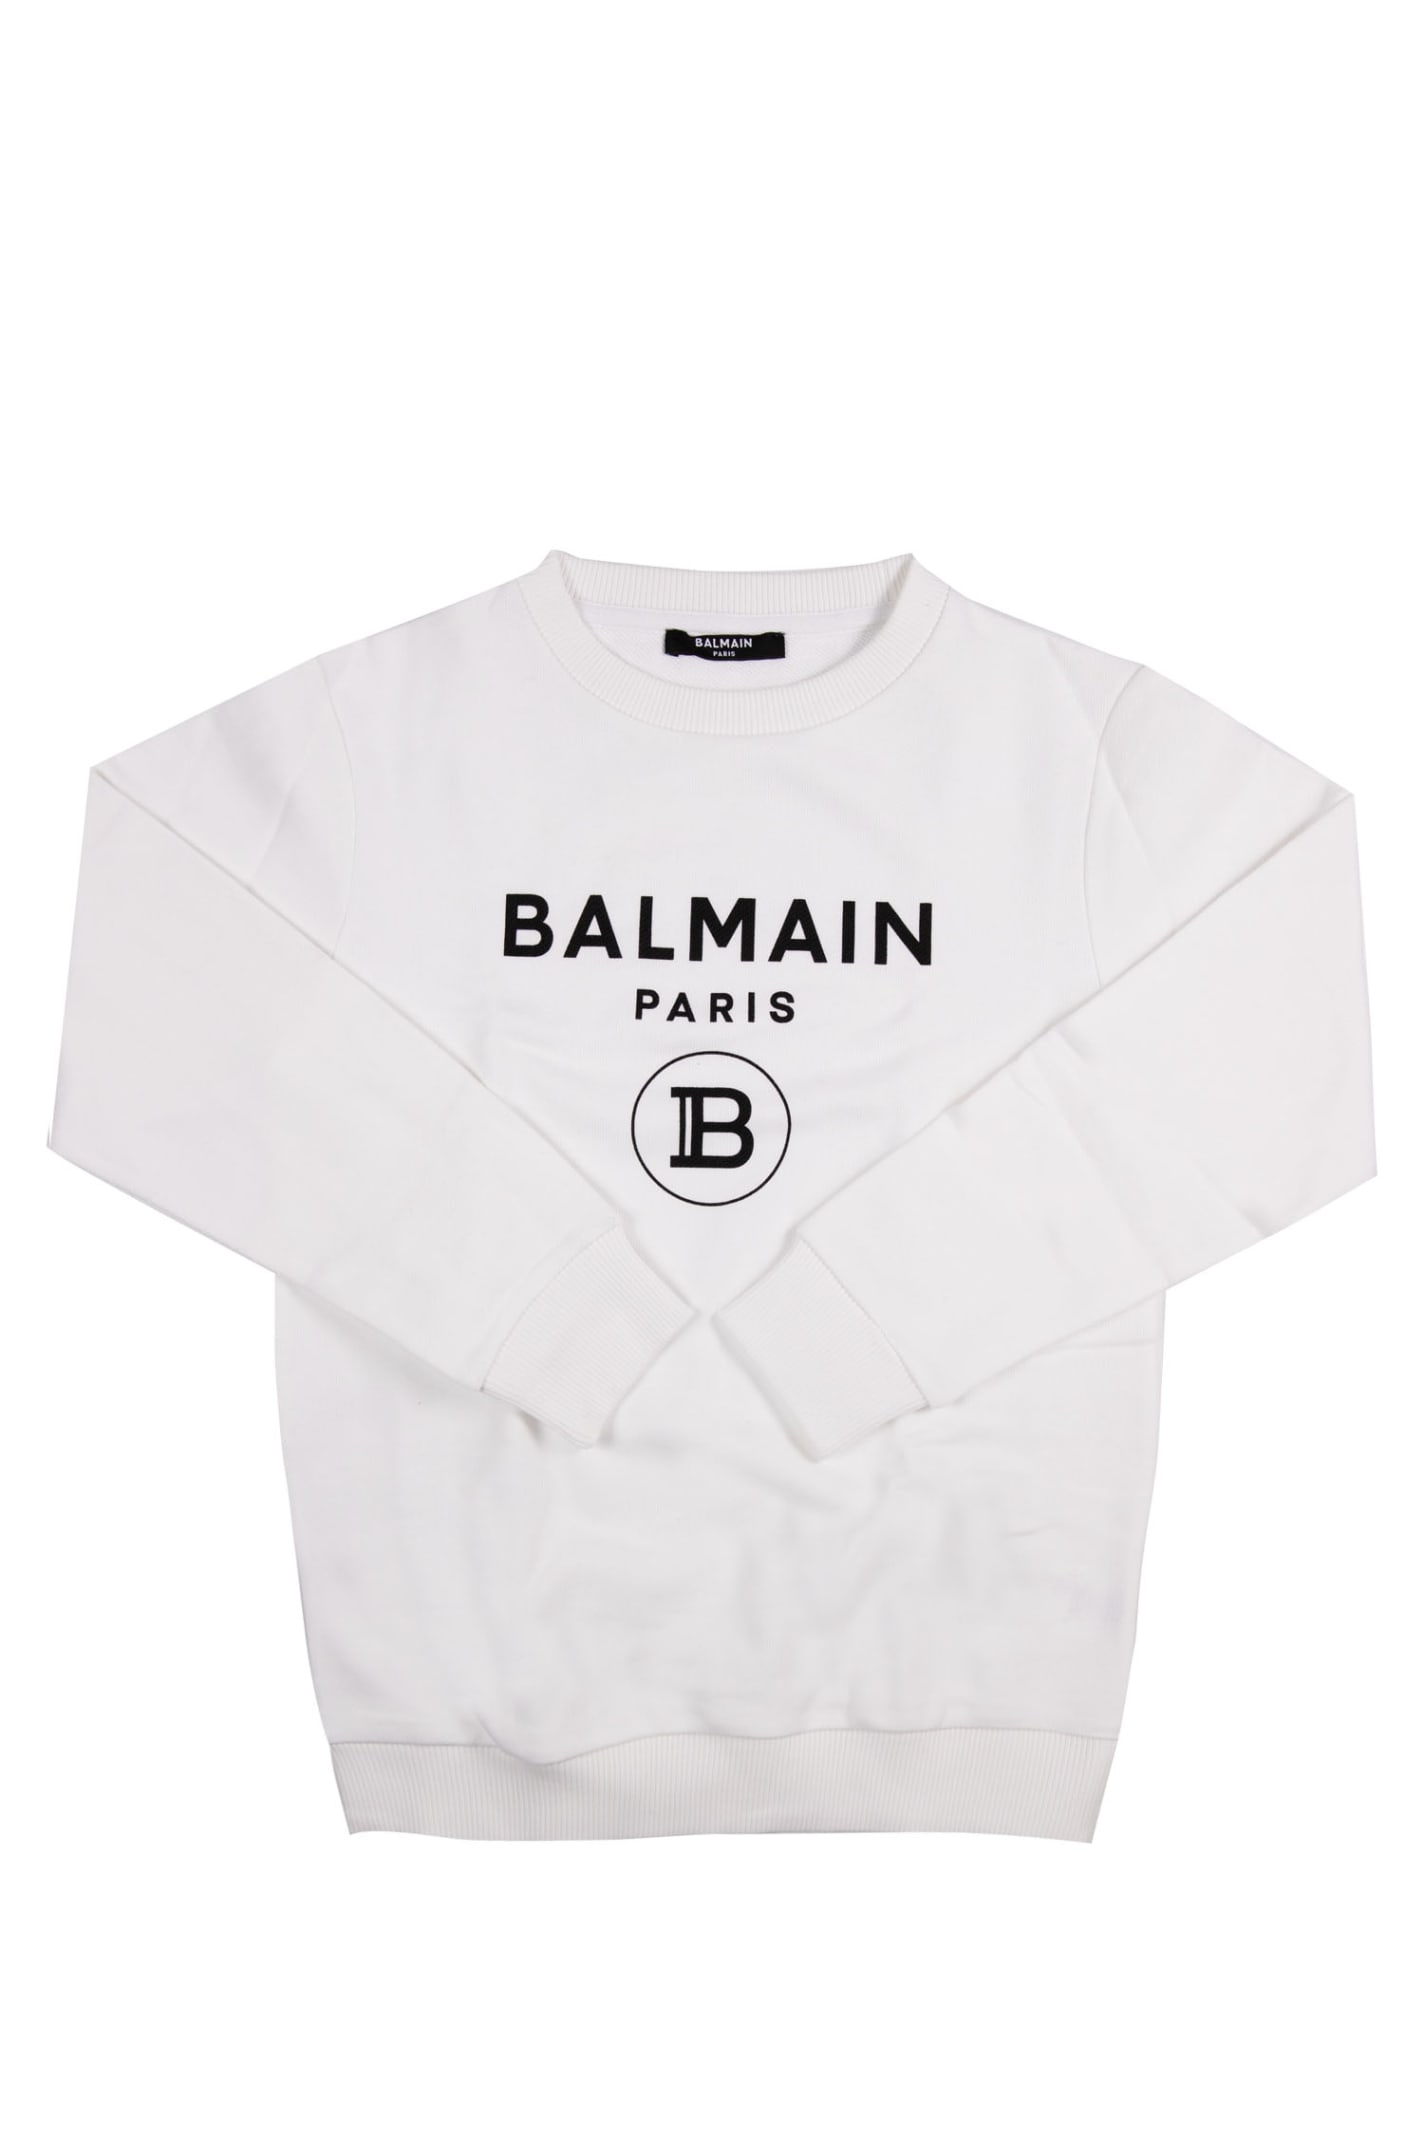 Balmain Kids' Cotton Jersey Sweatshirt In White